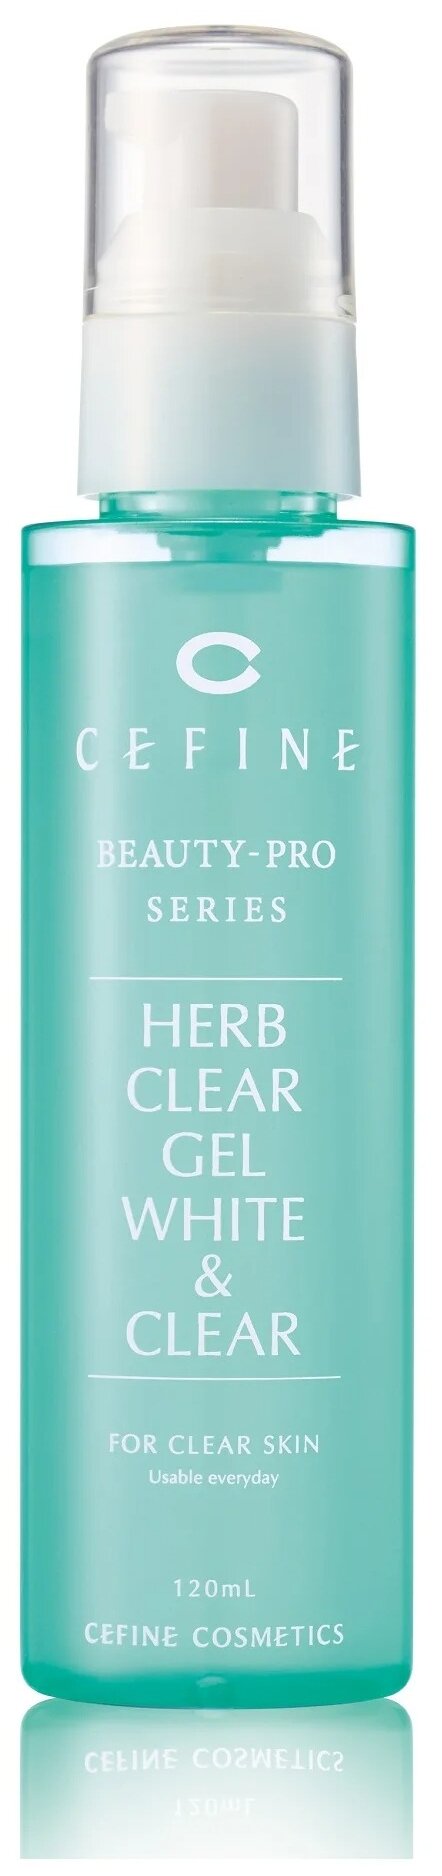 Cefine пилинг-гель для лица Beauty-Pro Series Herb Clear Gel White & Clear Осветляющий